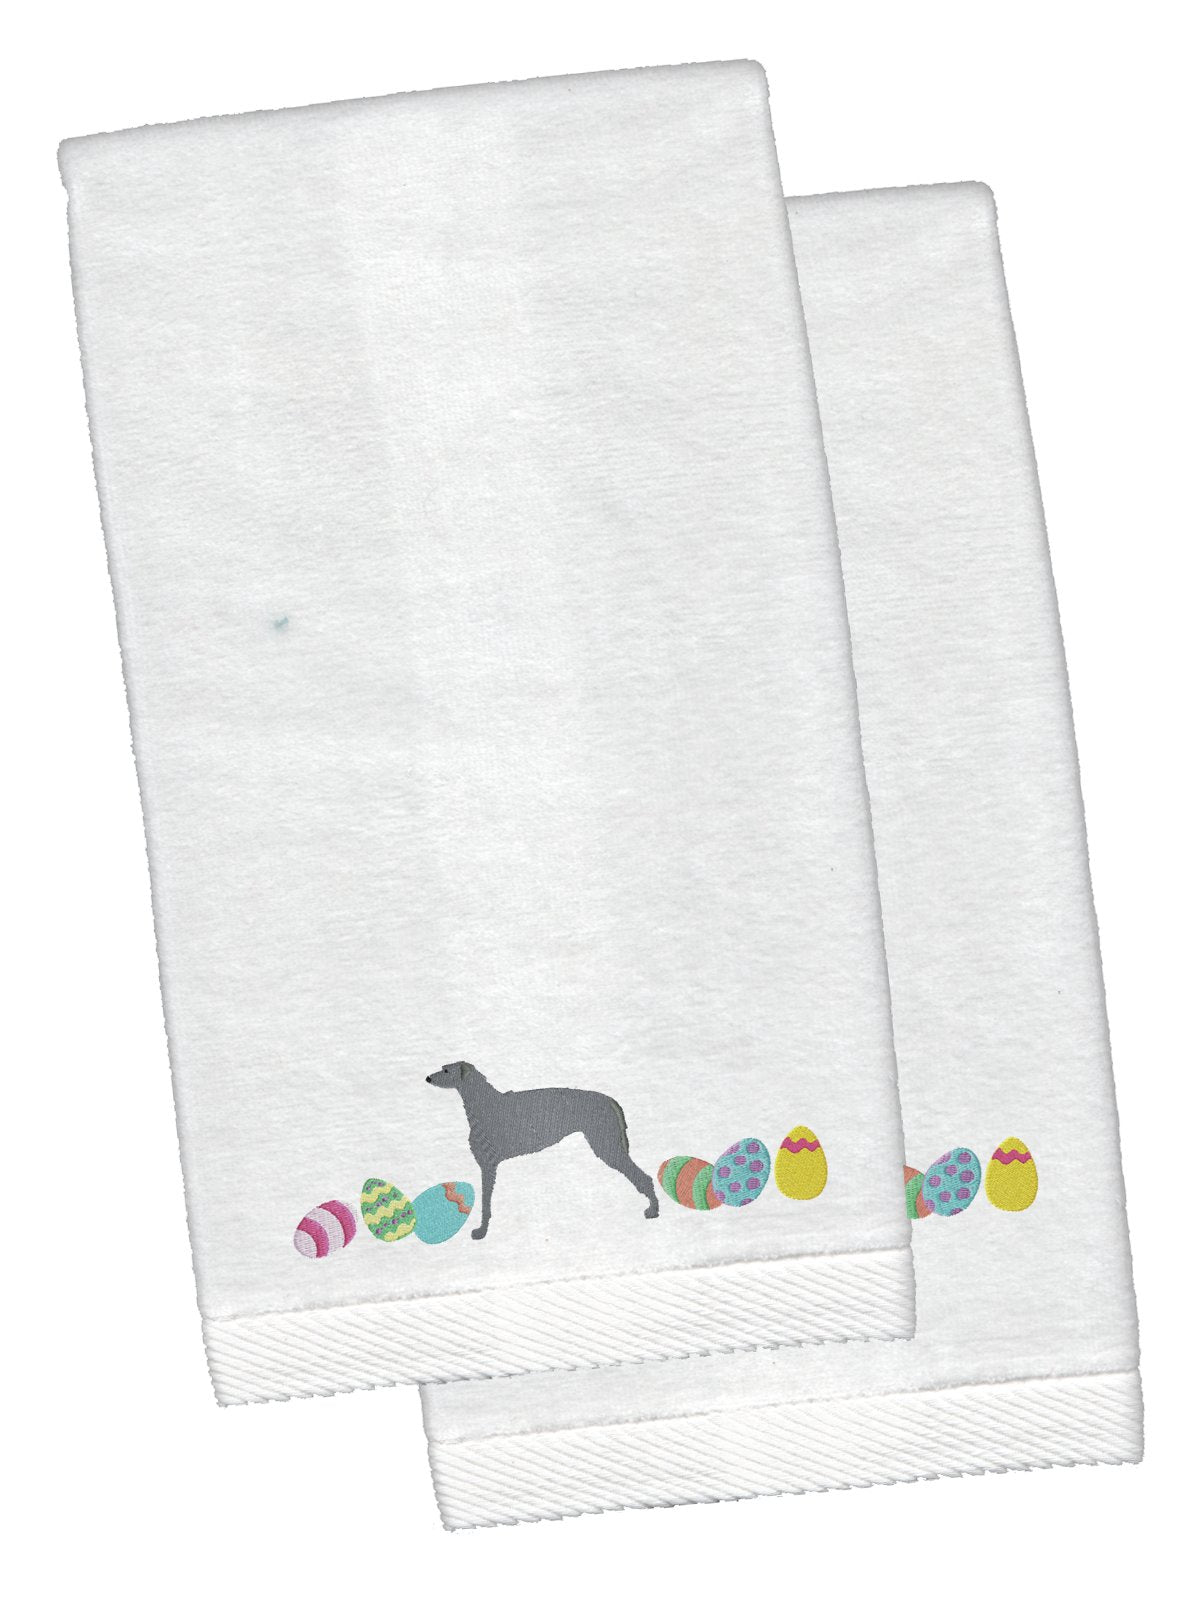 Scottish Deerhound Easter White Embroidered Plush Hand Towel Set of 2 CK1682KTEMB by Caroline's Treasures